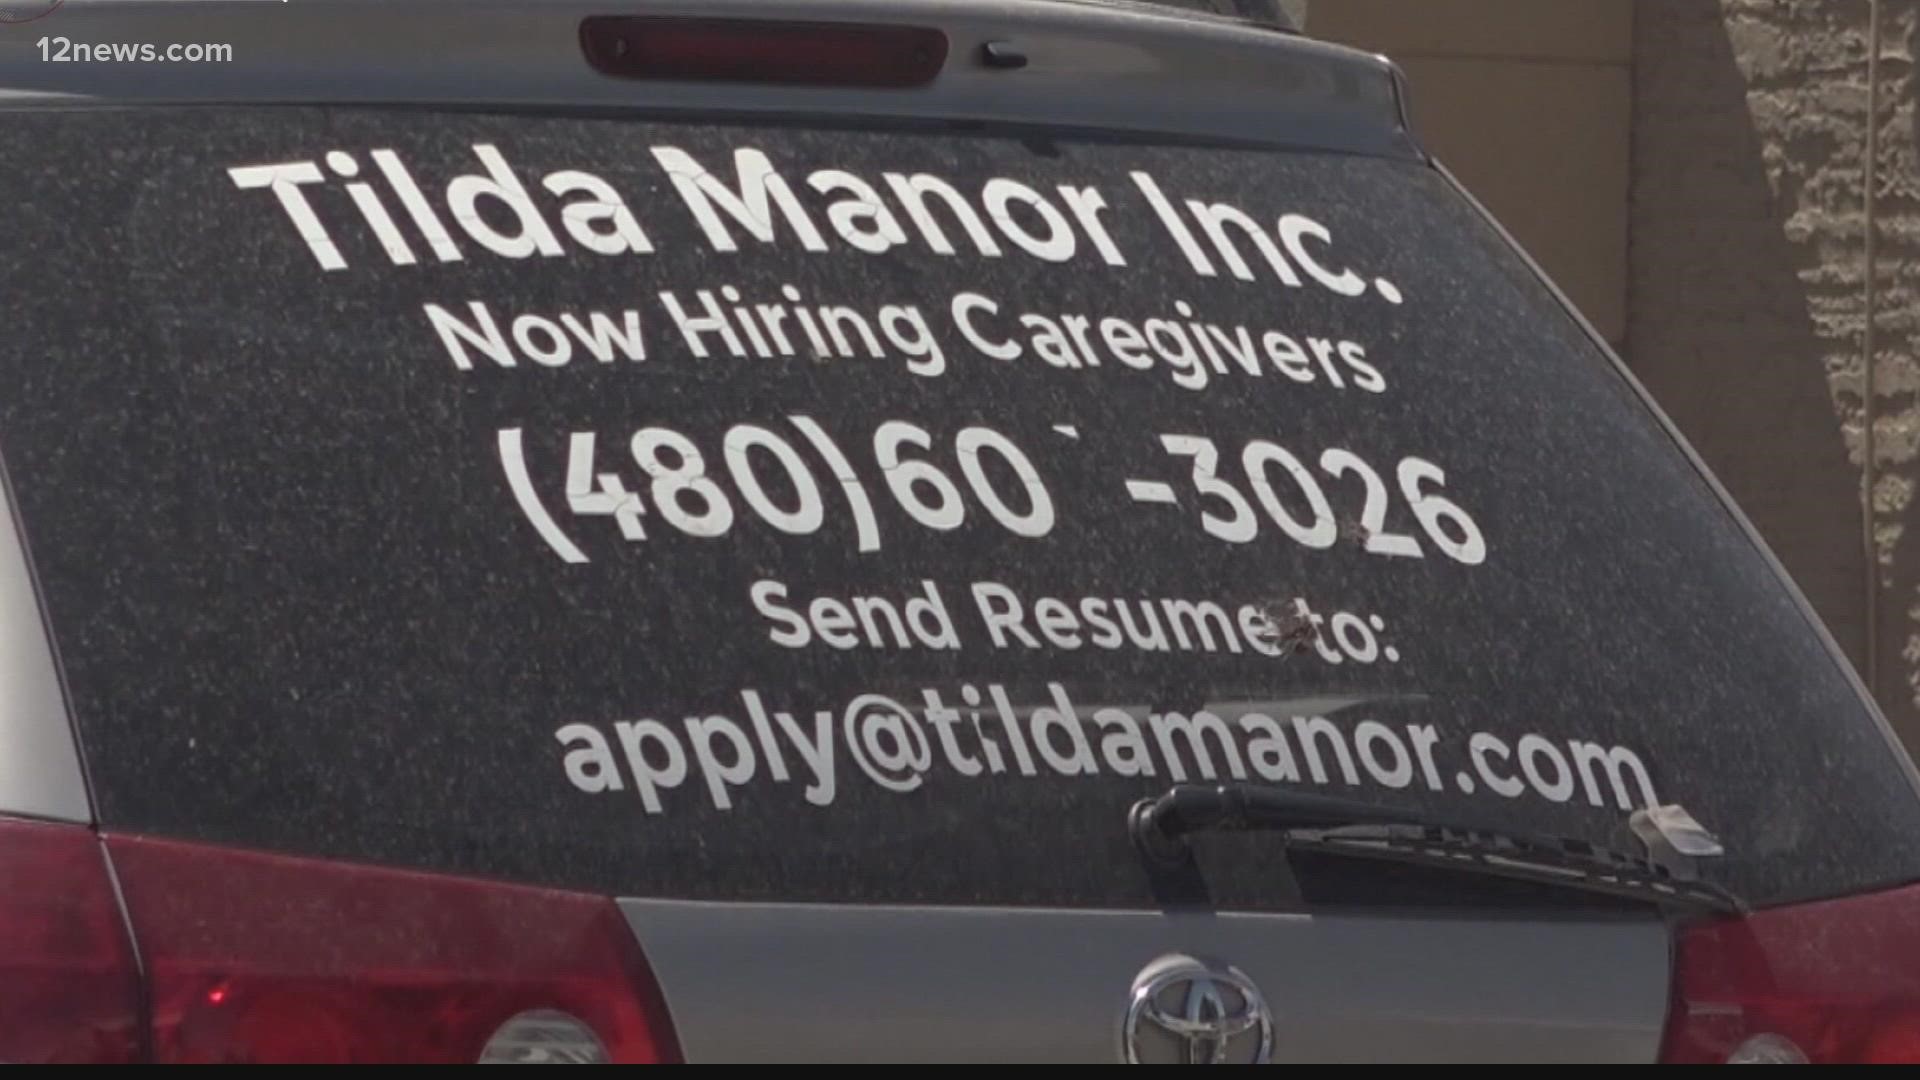 Company that owns Tilda Manor group home loses license at Mesa facility